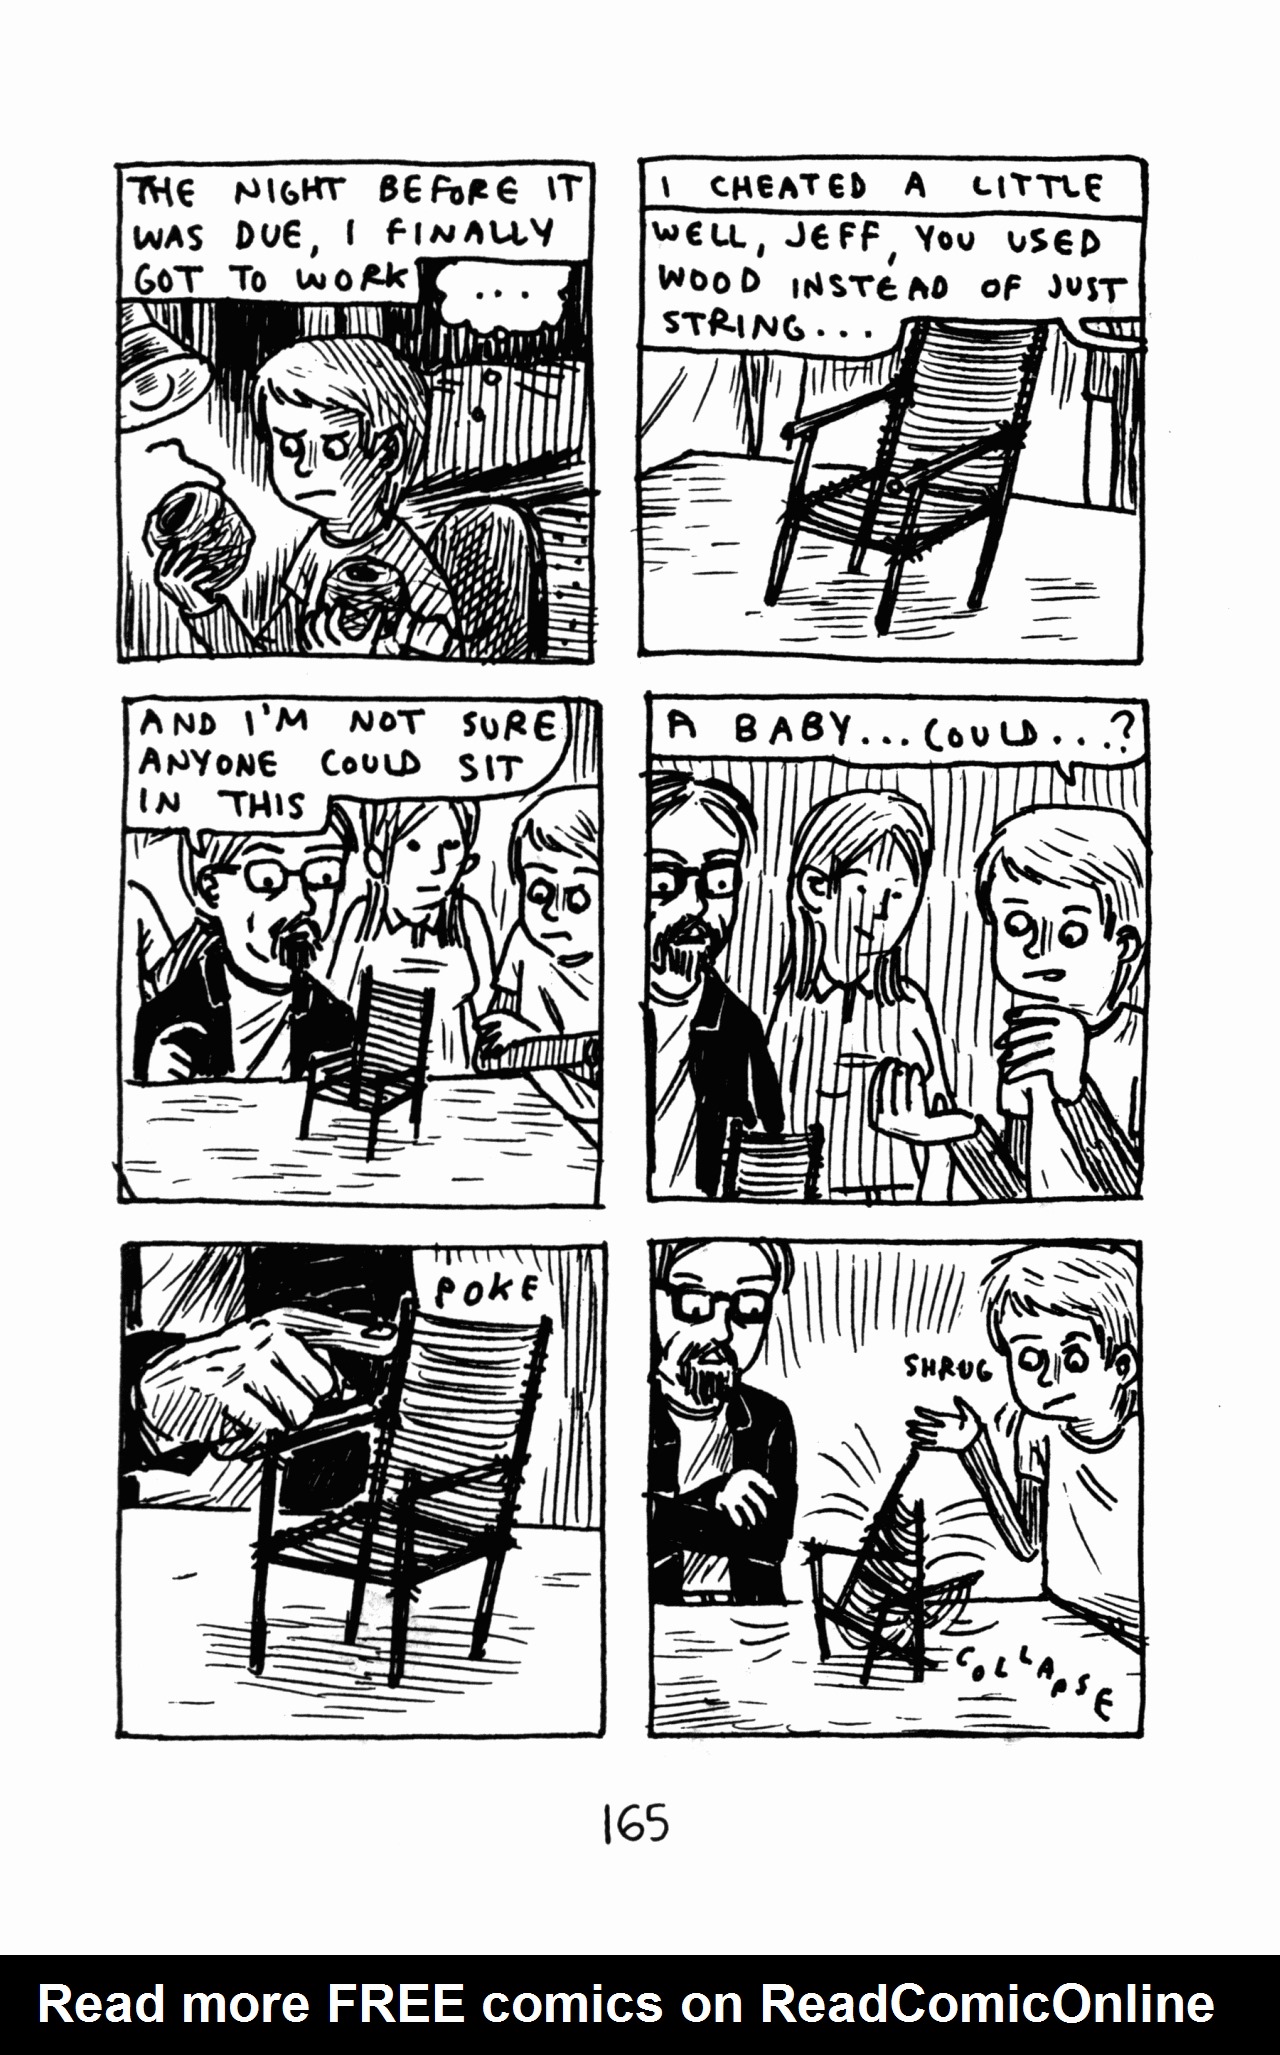 Read online Funny Misshapen Body: A Memoir comic -  Issue # TPB (Part 2) - 66